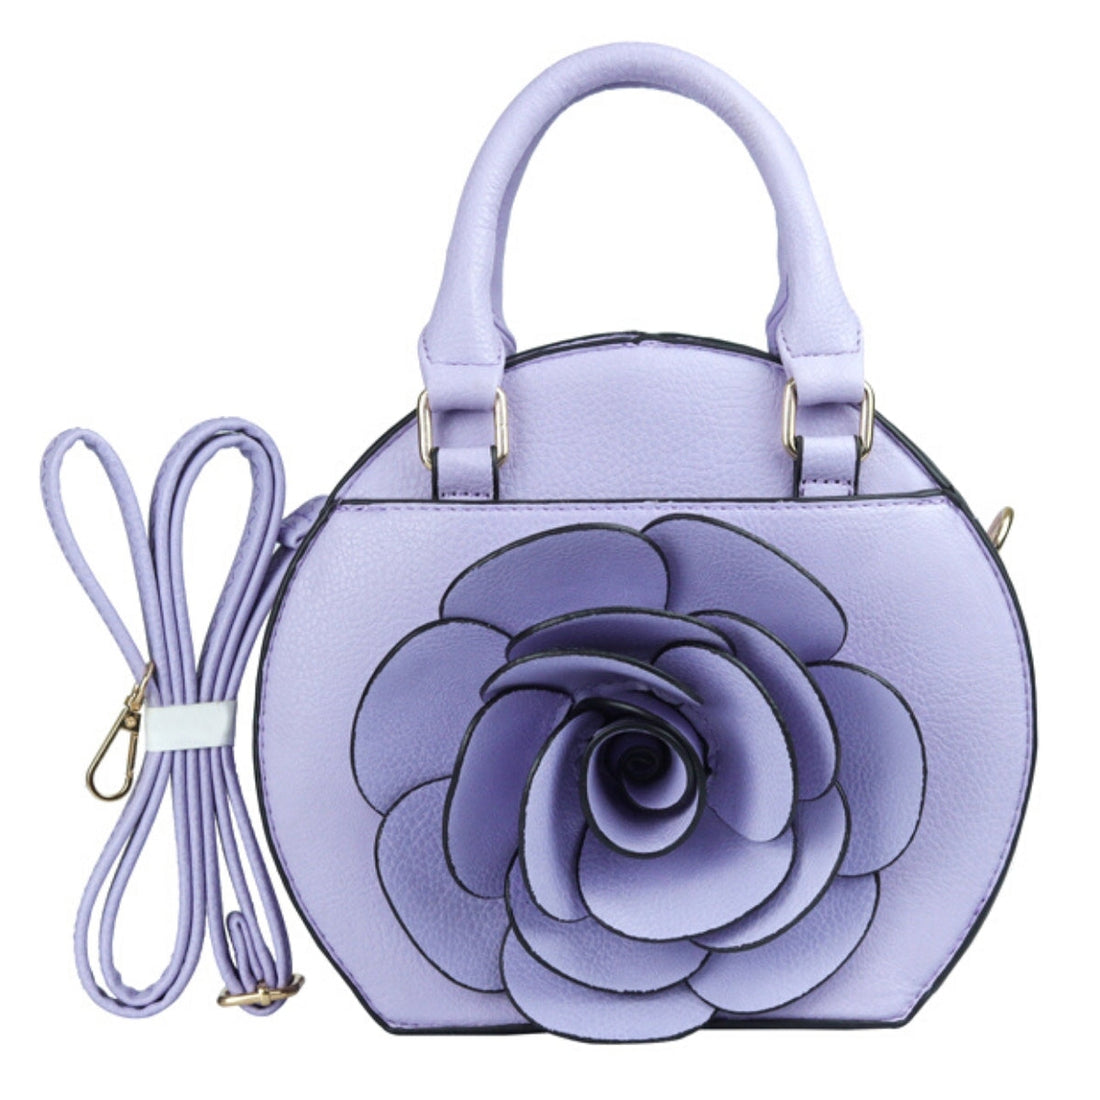 Purple Rose Rounded Handbag